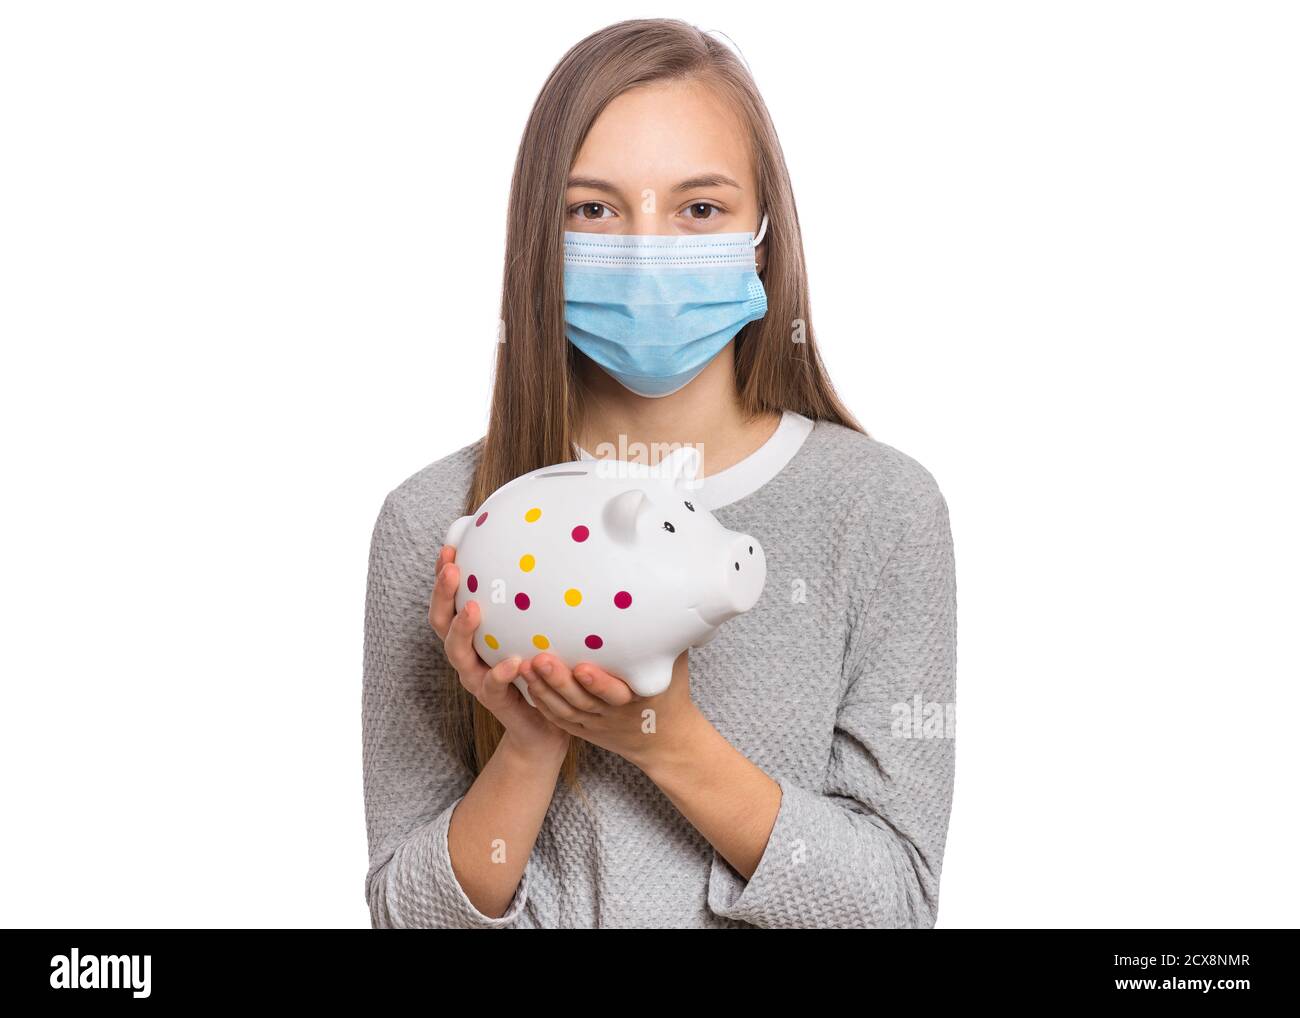 Concept of coronavirus quarantine. Portrait of teen girl wearing medical protective mask. Child holding Piggy Bank. Saving Money concept. COVID-19. Stock Photo